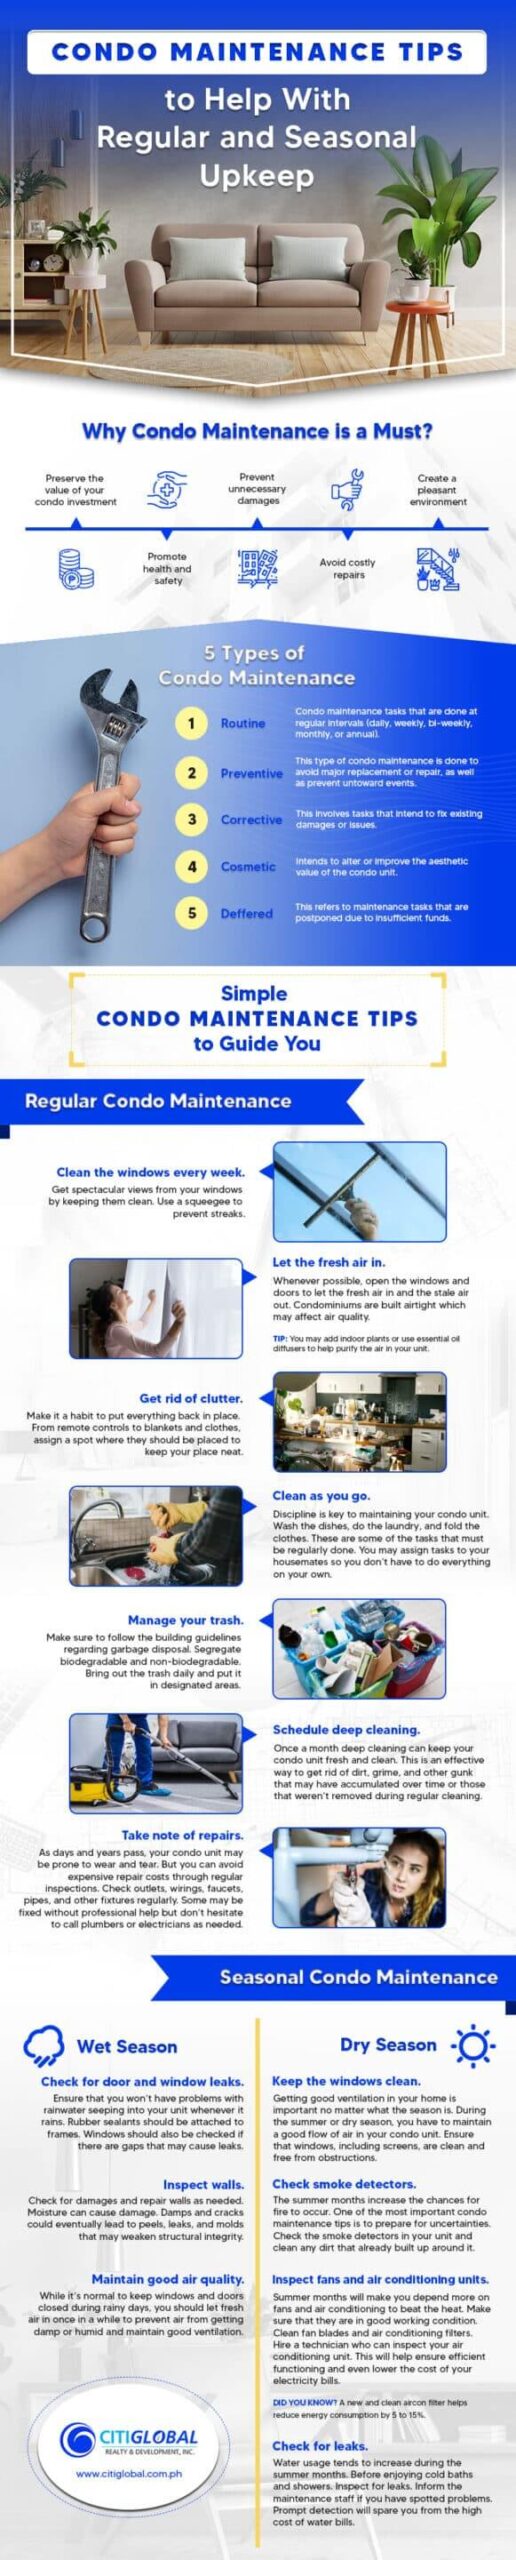 Condo Maintenance Tips